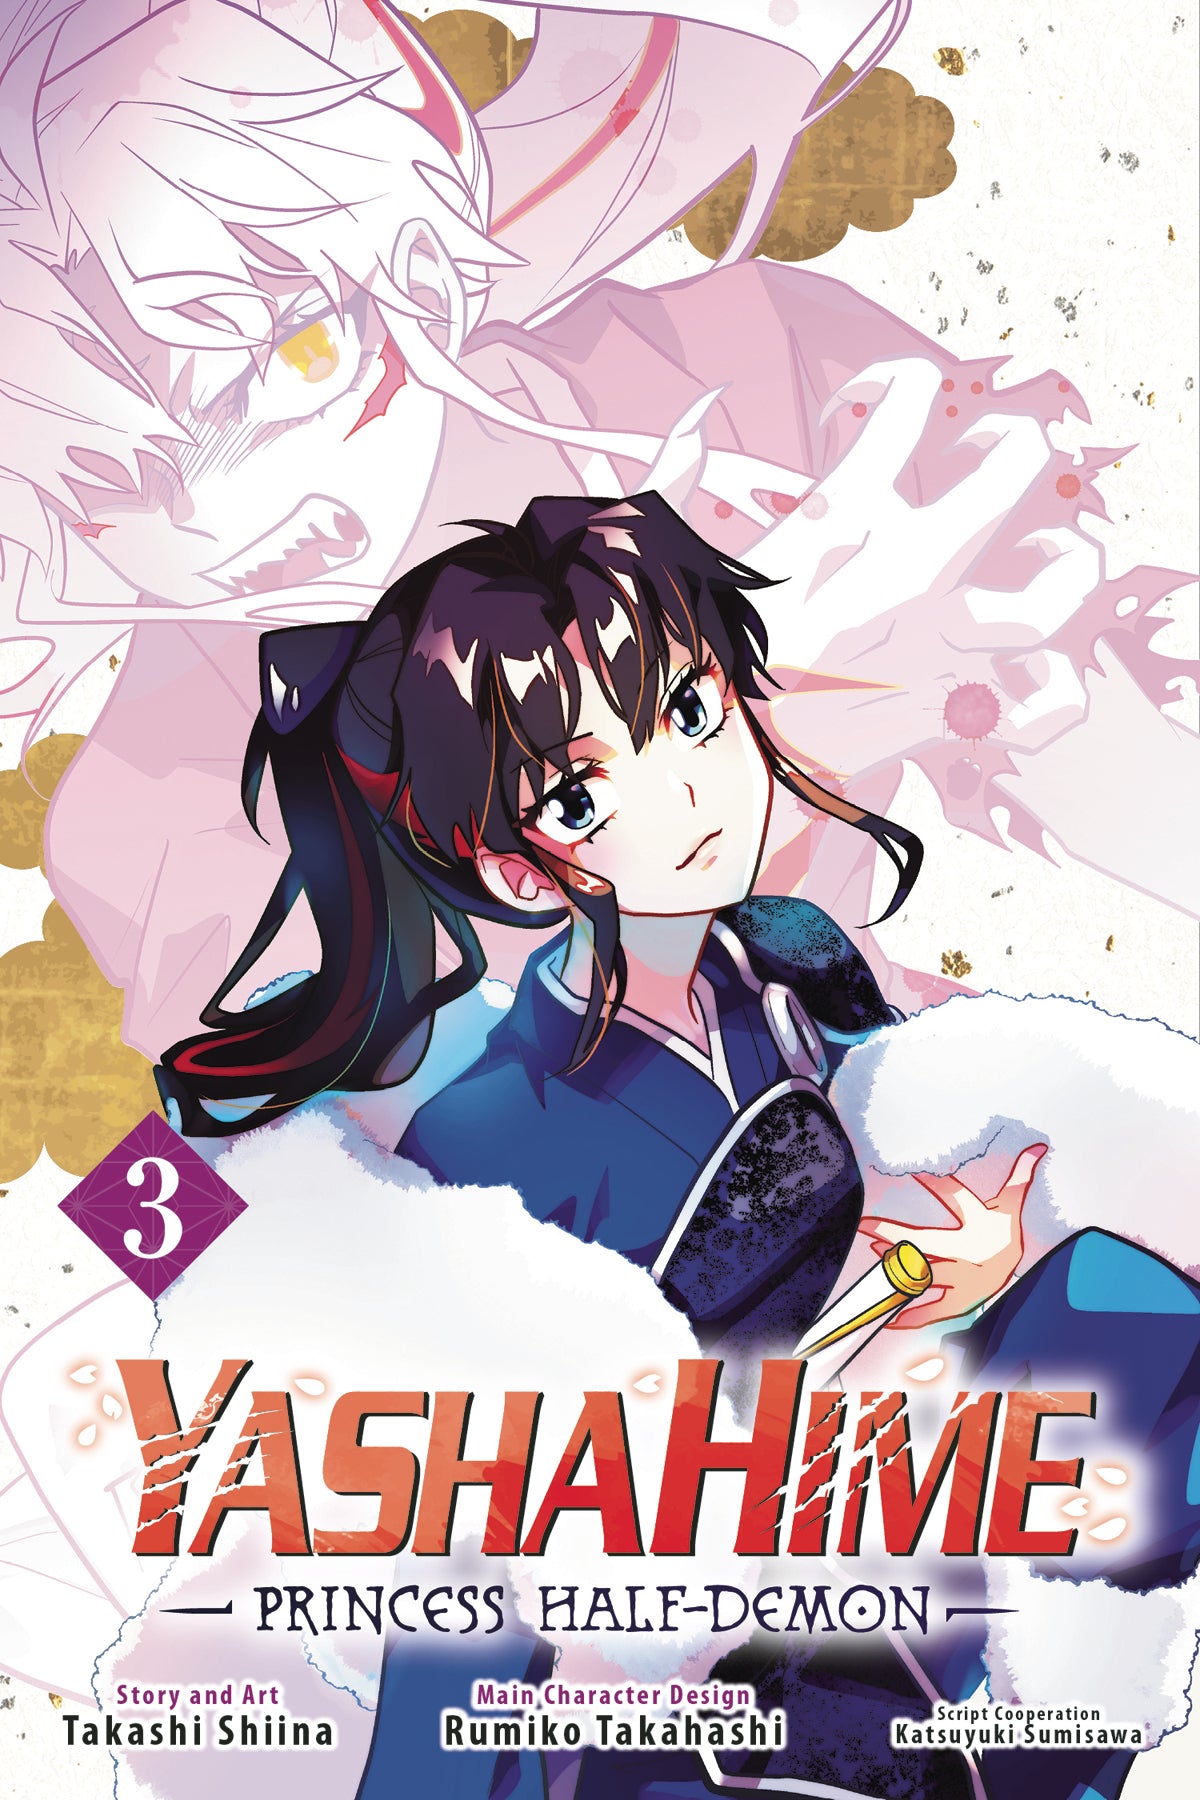 Yashahime: Princess Half-Demon Opening 1 